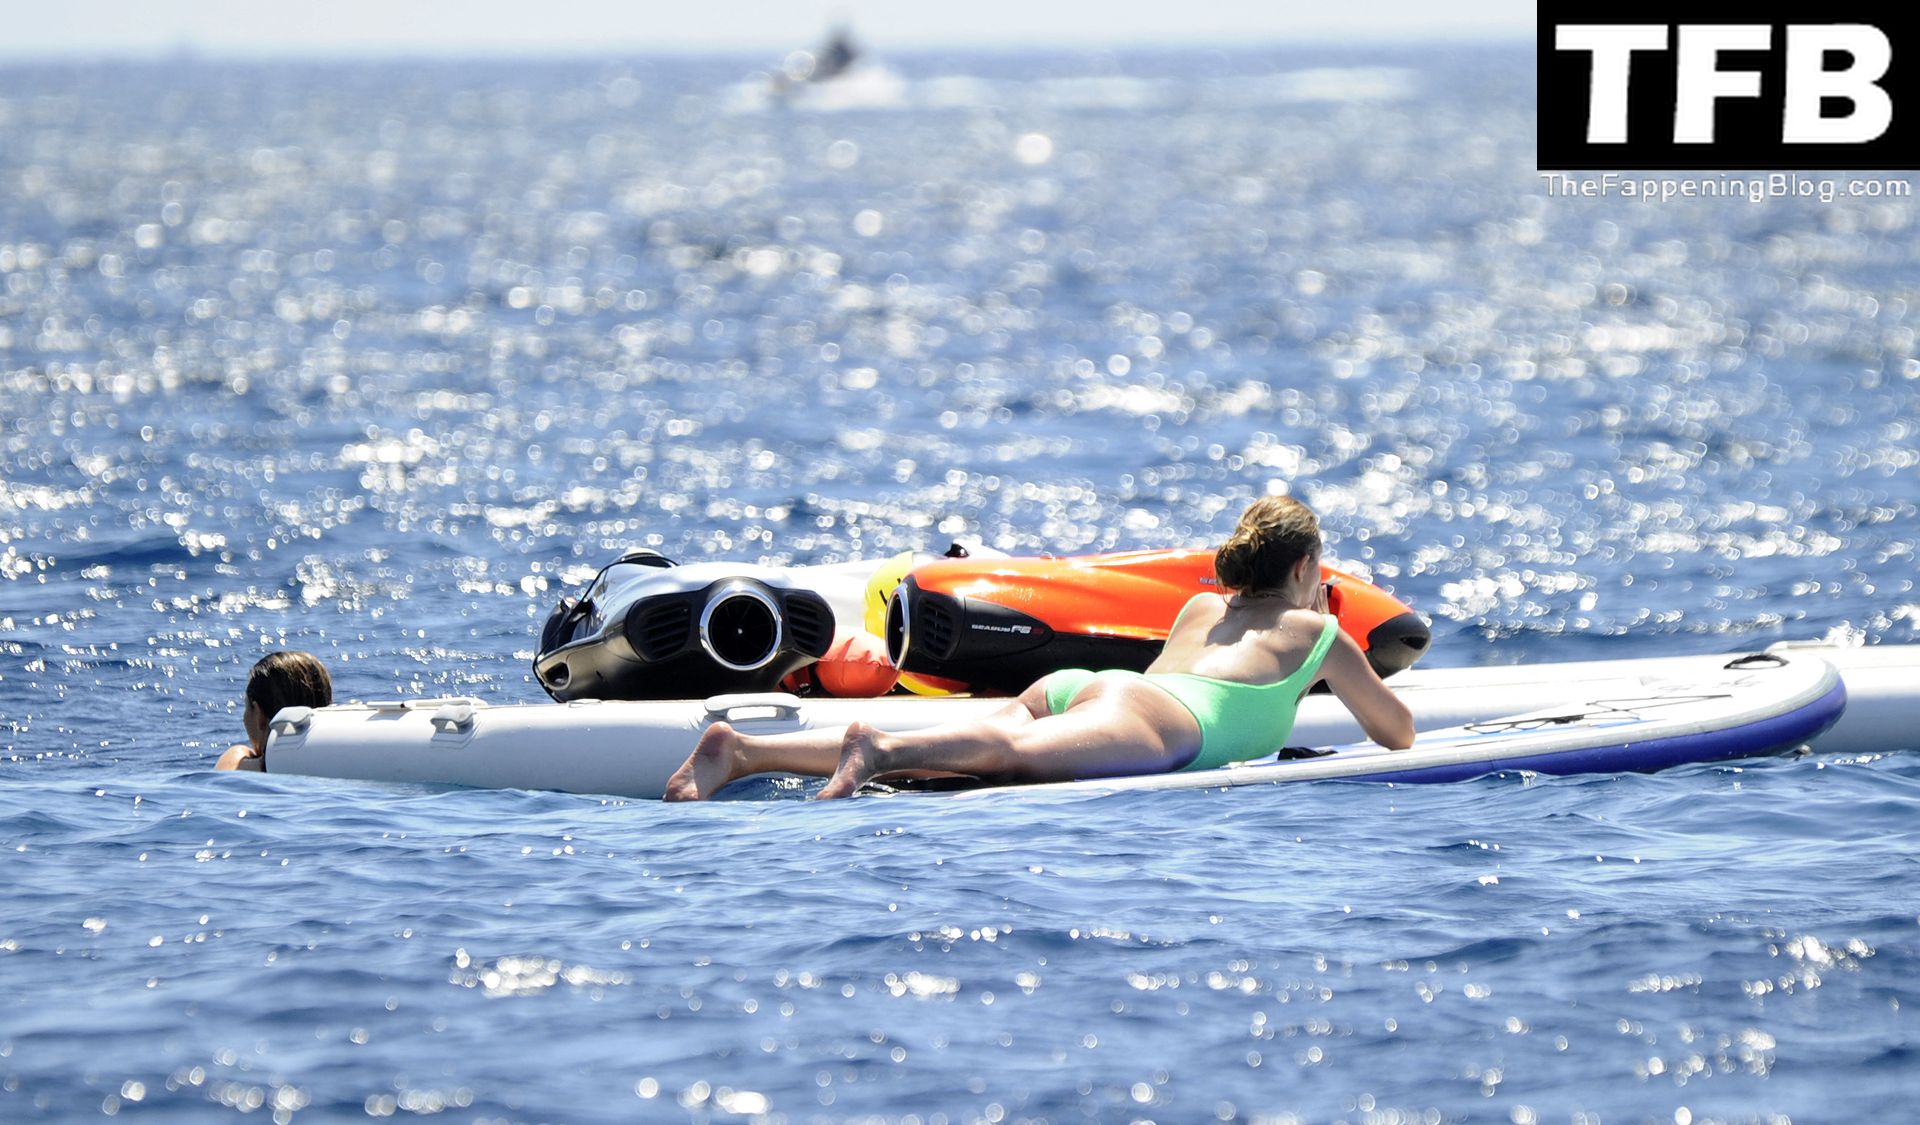 Rosie Huntington-Whiteley &amp; Jason Statham Enjoy a Fun Boat Day in Formentera (71 Photos)